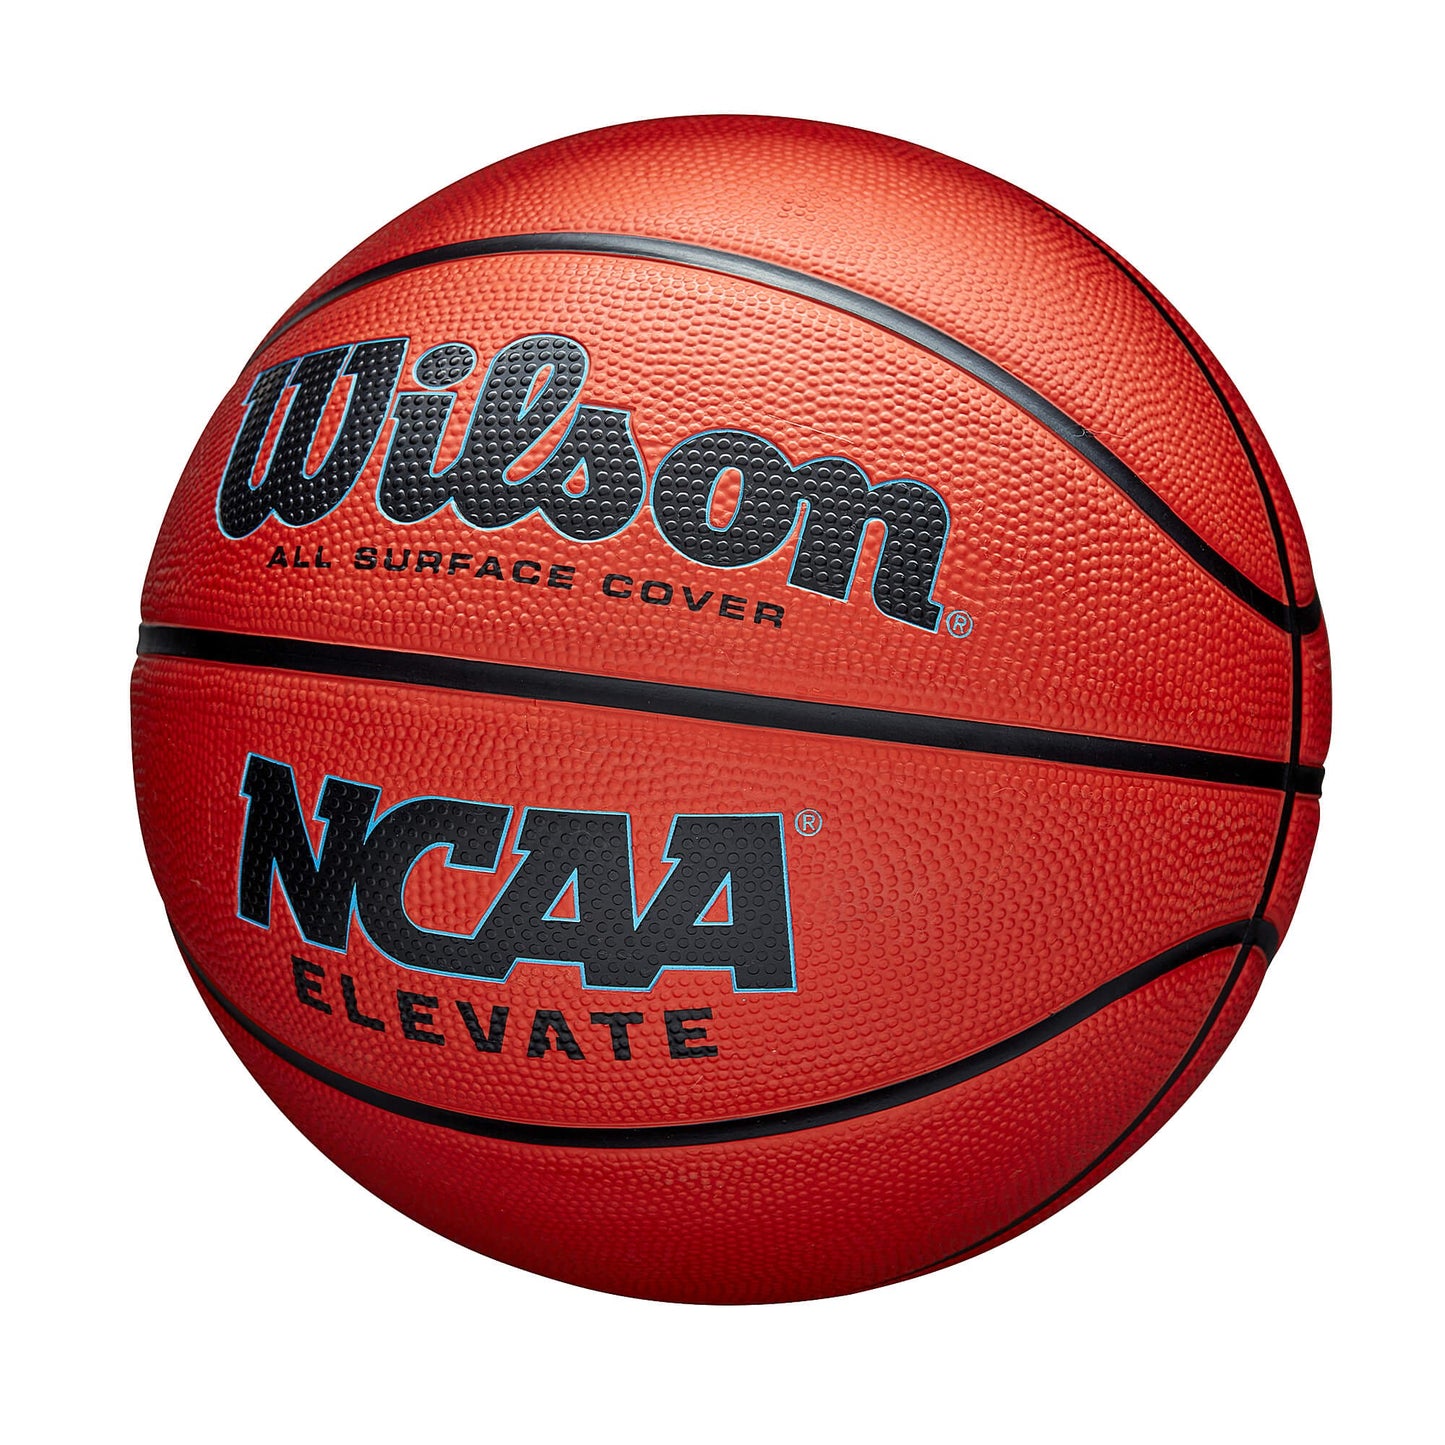 Wilson NCAA ELEVATE BSKT Orange/Navy (sz. 7)